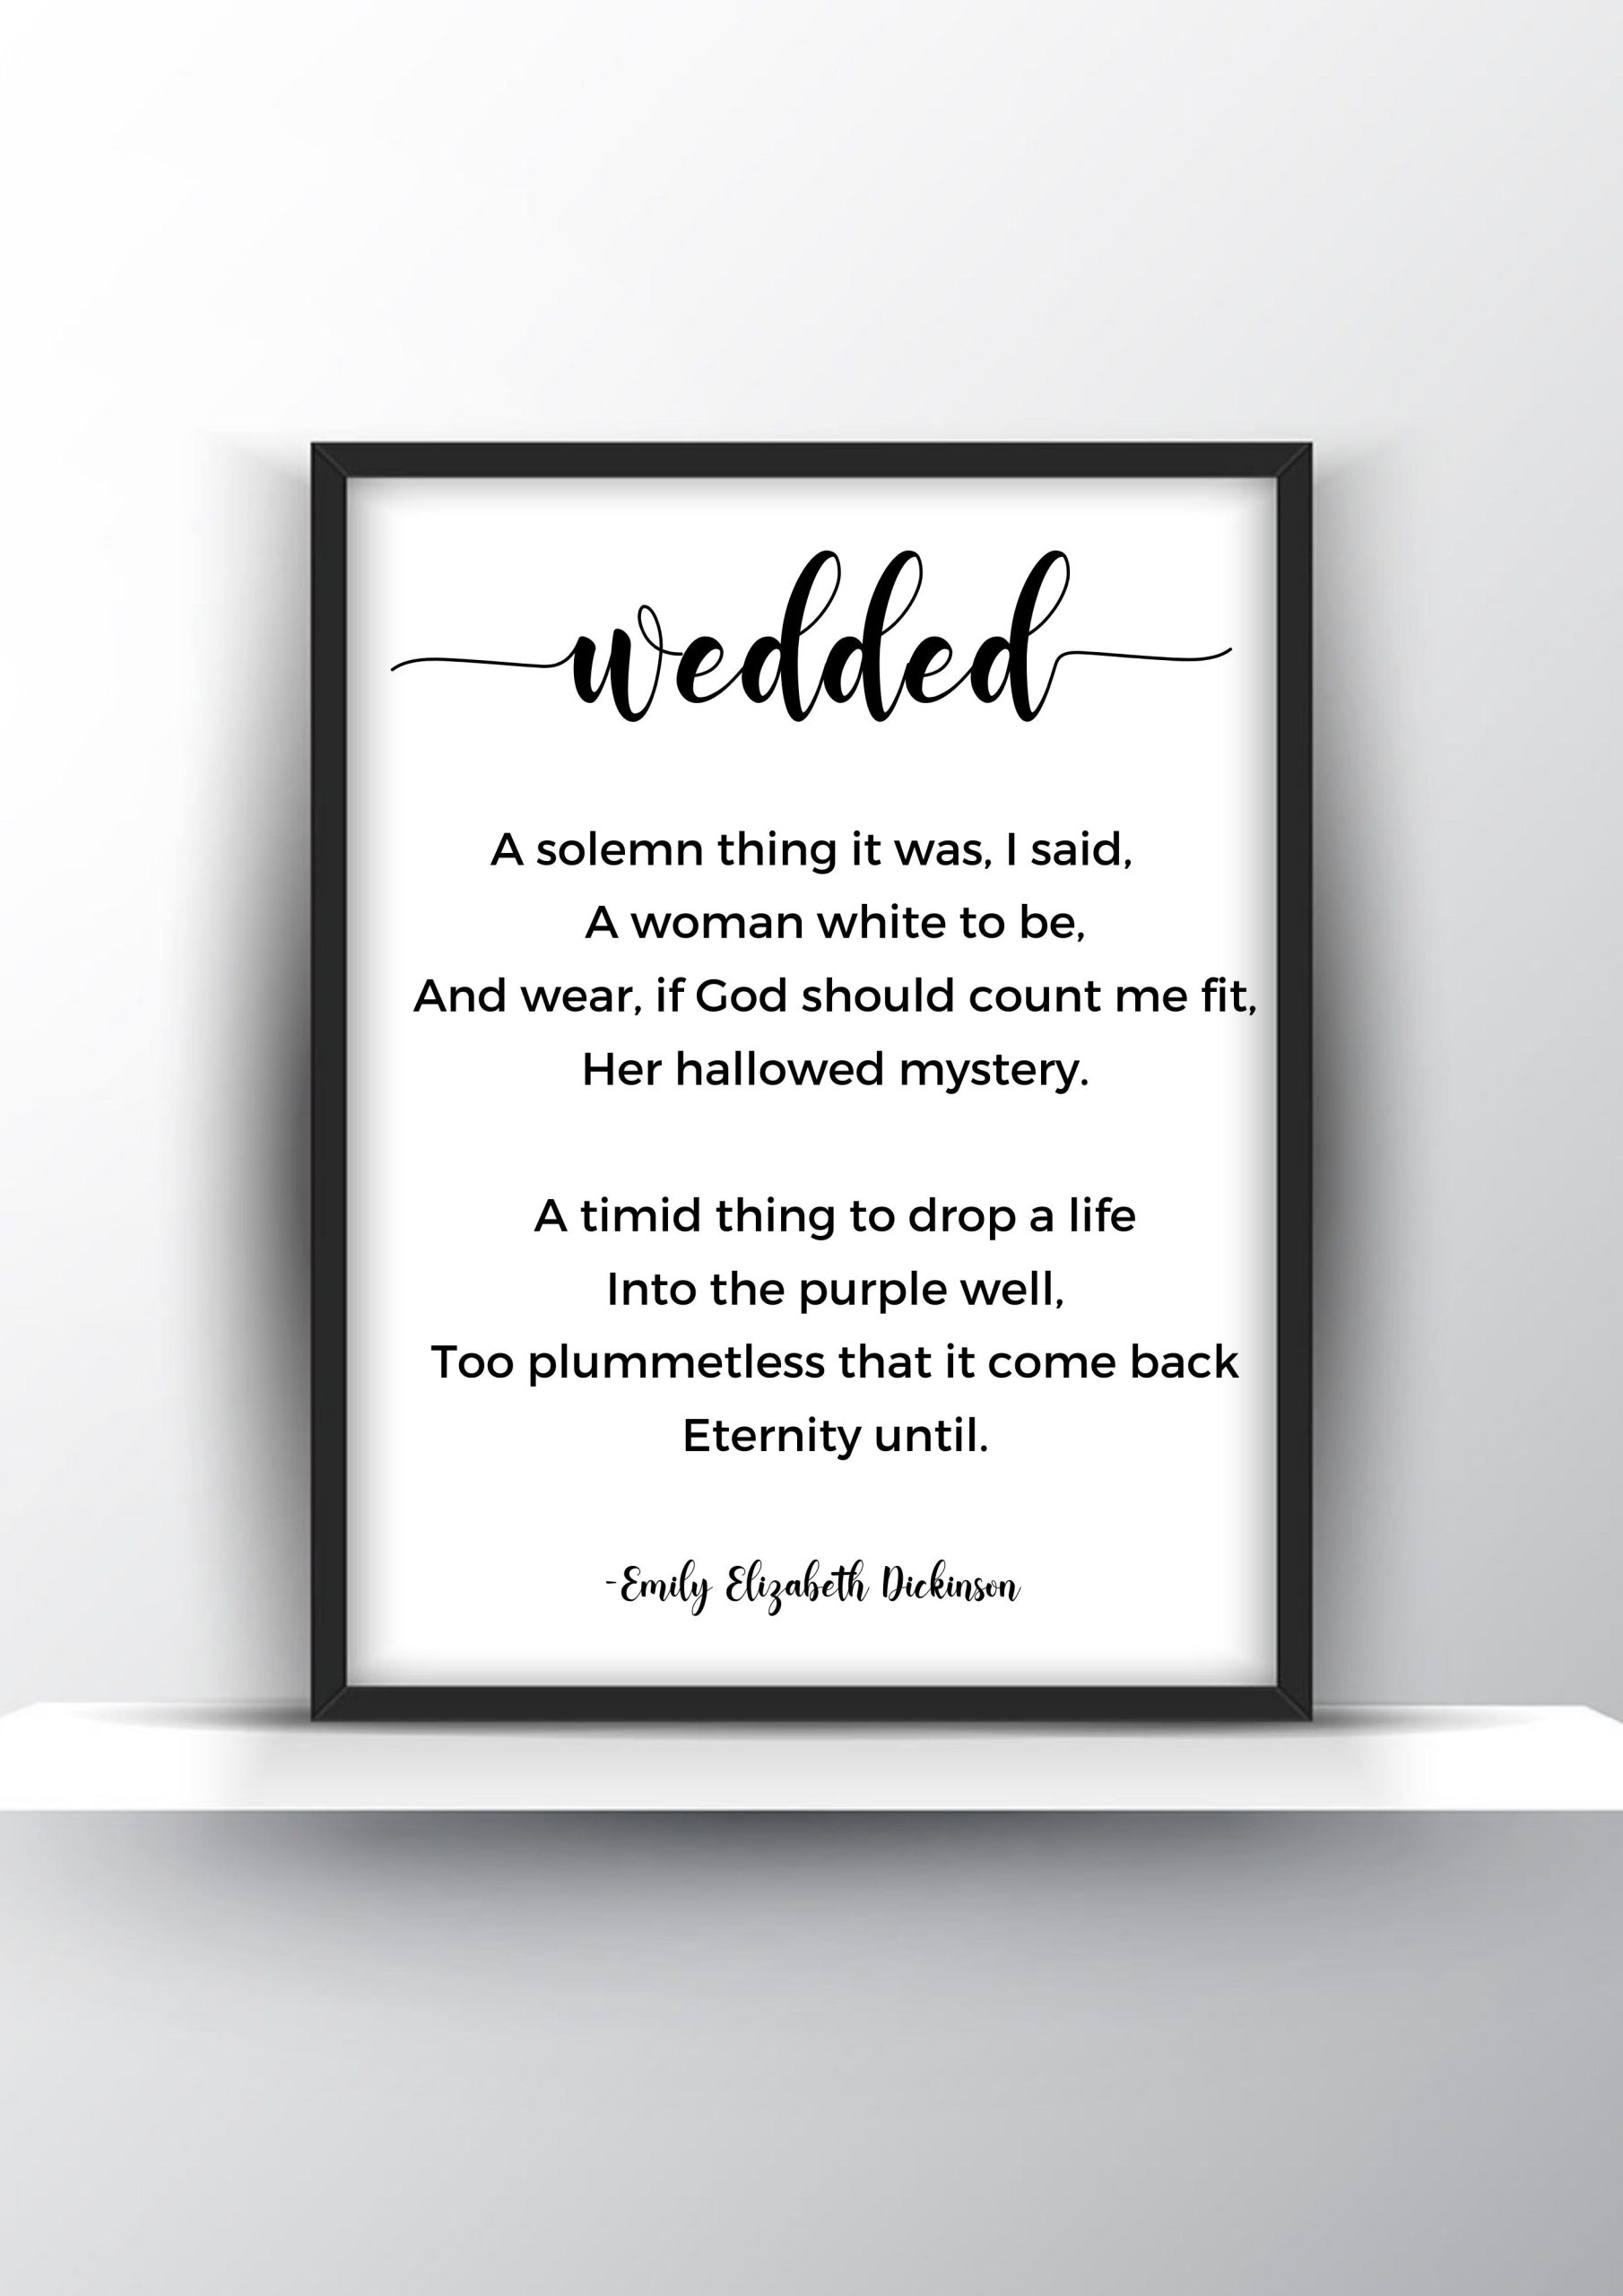 Wedded Poem by Emily Elizabeth Dickinson Printable Wall Art